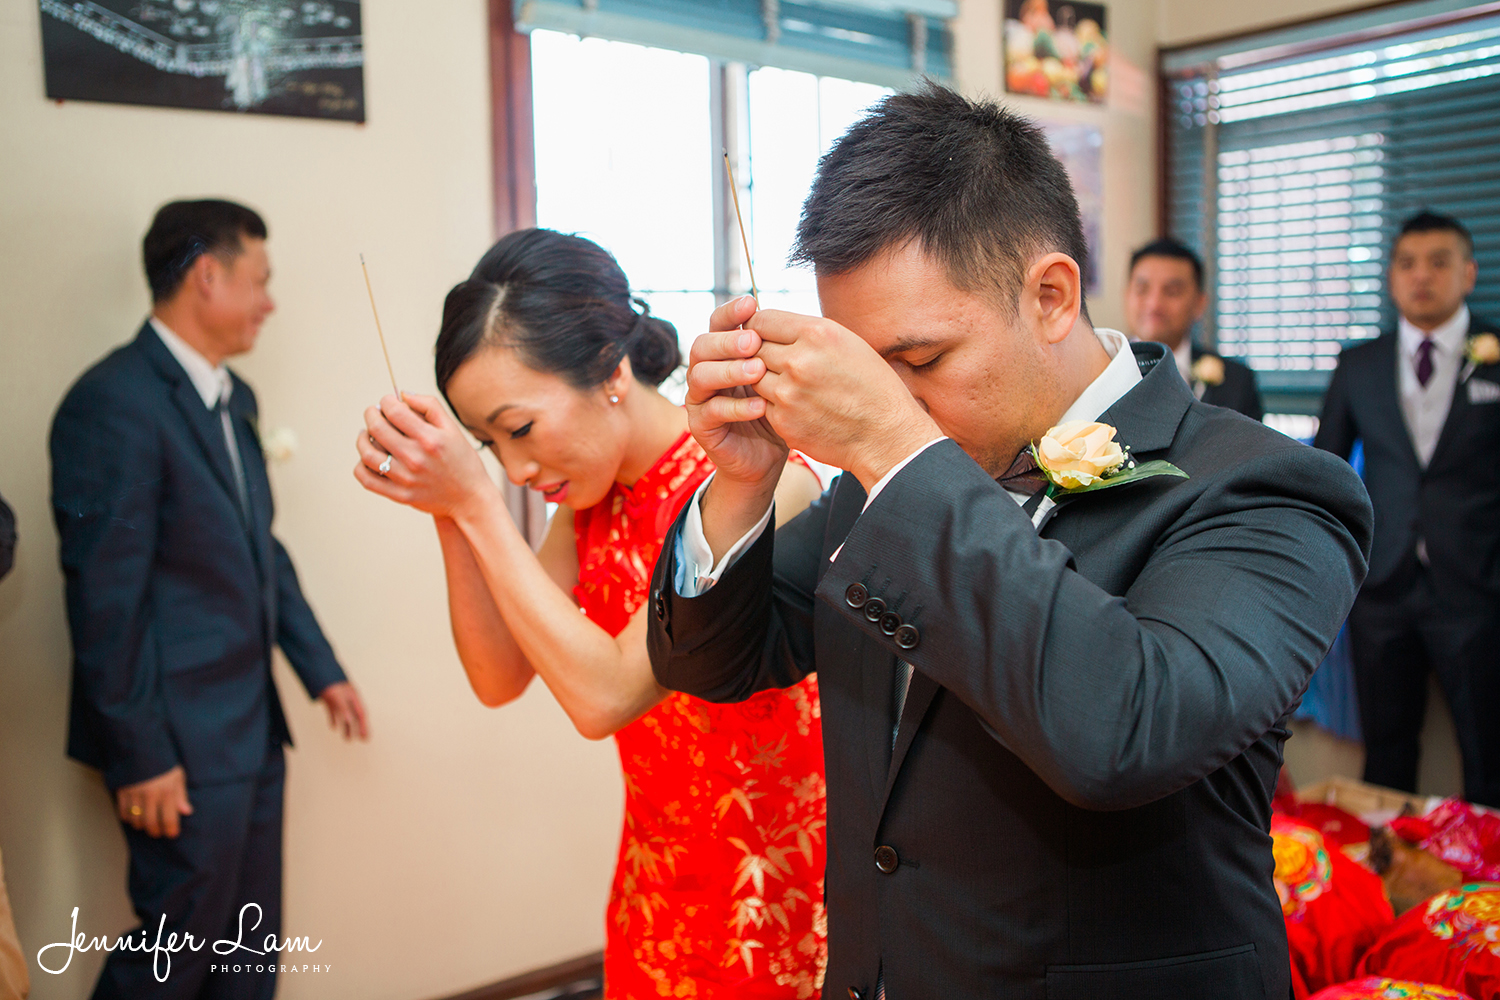 Sydney Wedding Photographer - Jennifer Lam Photography (41).jpg